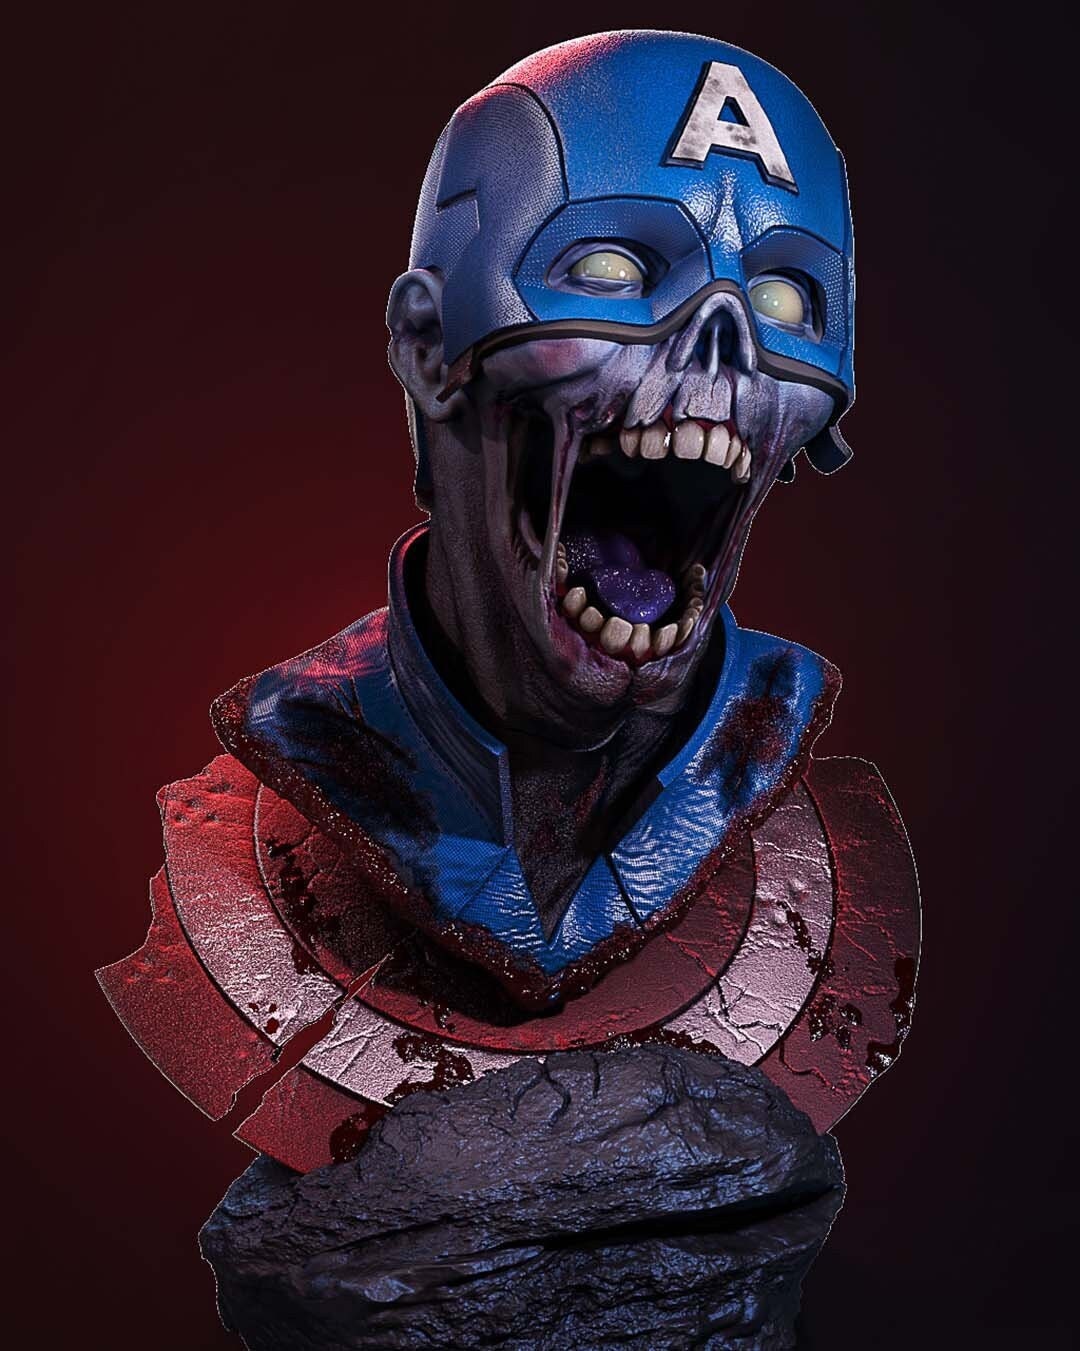 10 Inch Zombie Captain America Funko Pop! 949 Marvel What If? Vinyl Figure  Exclusive